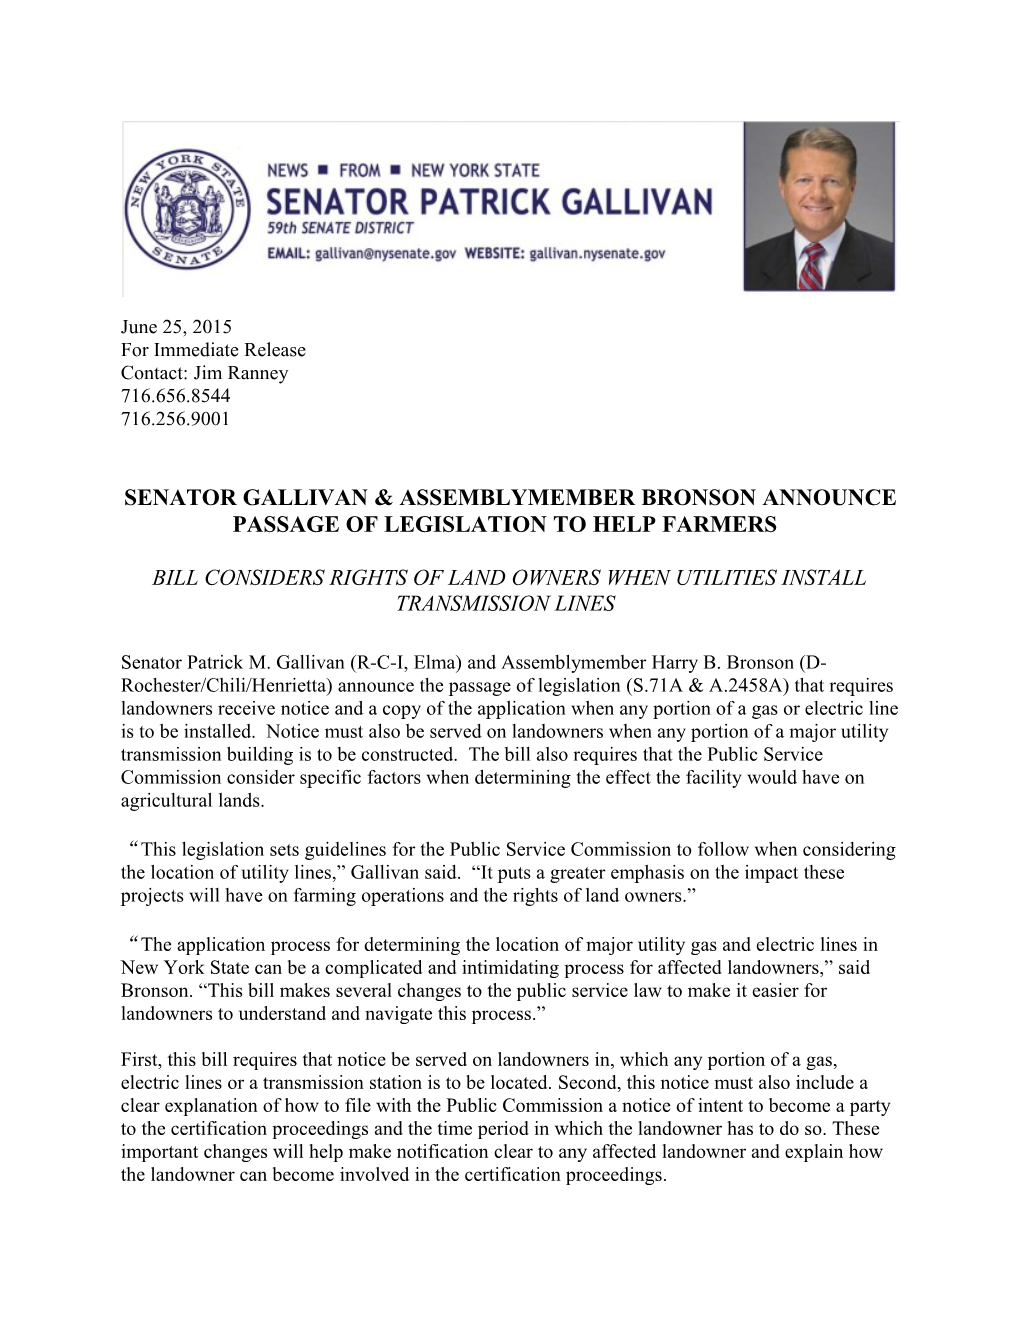 Senator Gallivan & Assemblymember Bronson Announce Passage of Legislation to Help Farmers